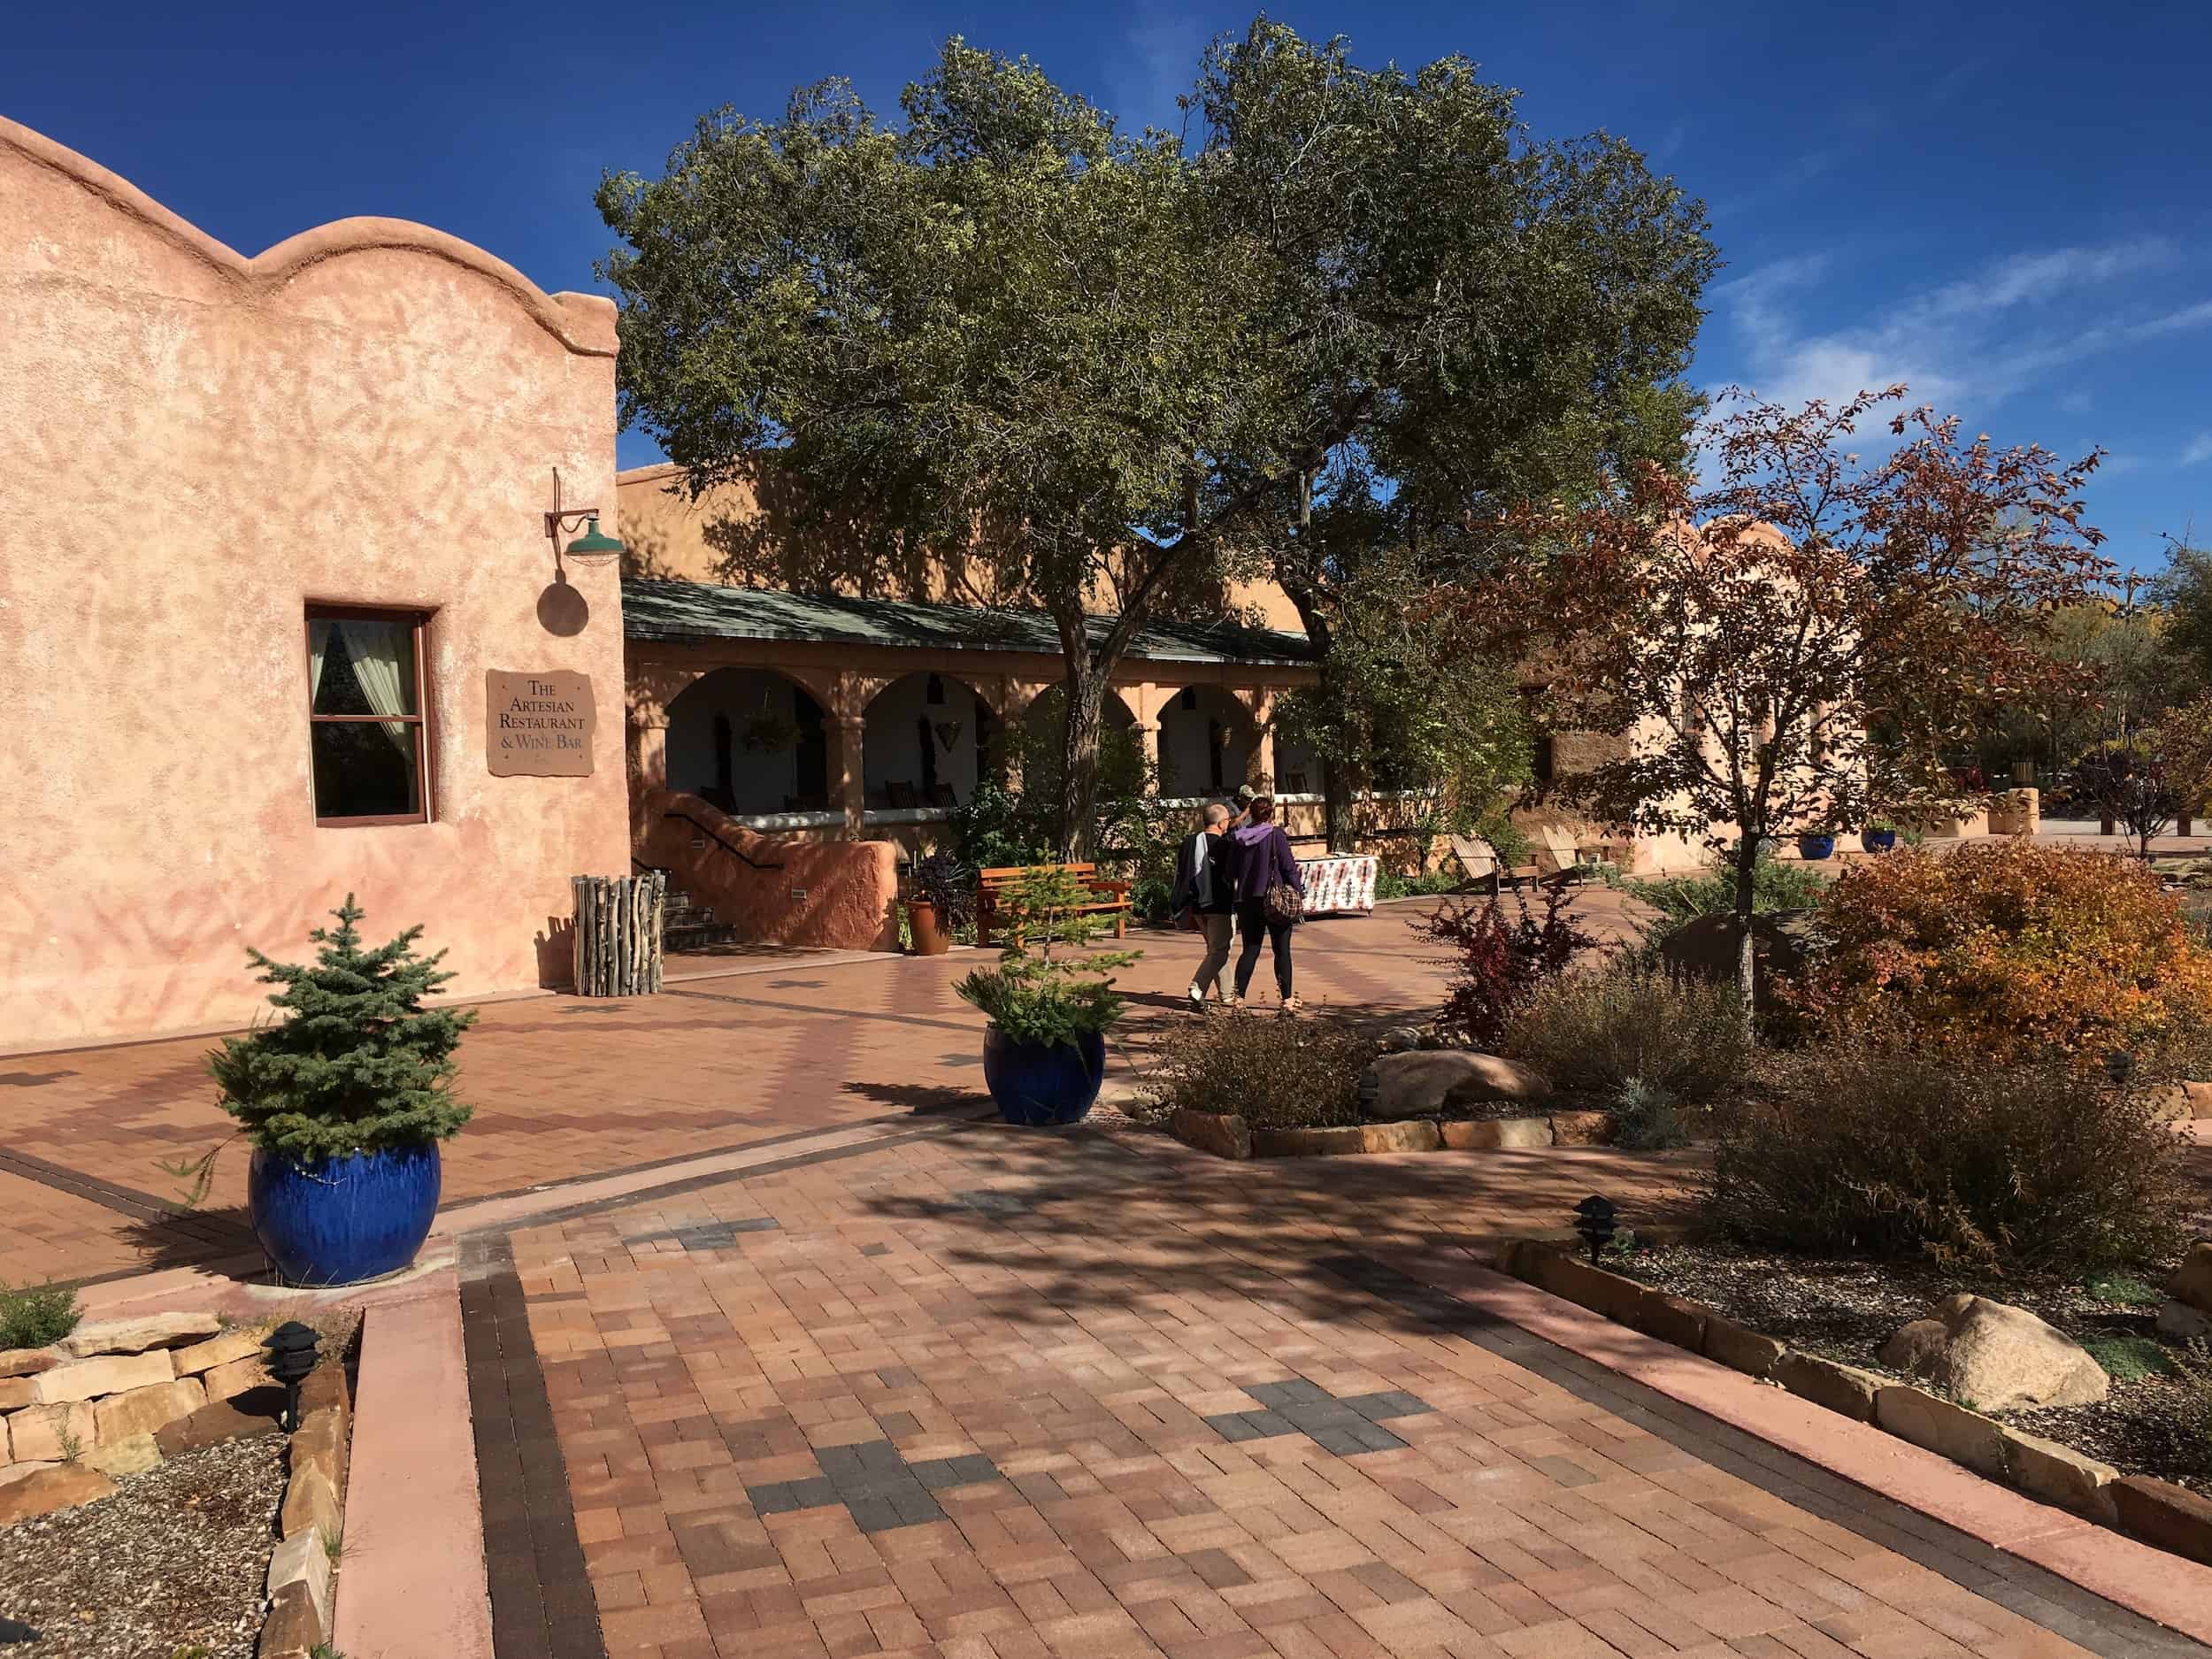 Artesian Restaurant at Ojo Caliente Mineral Springs Resort and Spa in Ojo Caliente, New Mexico